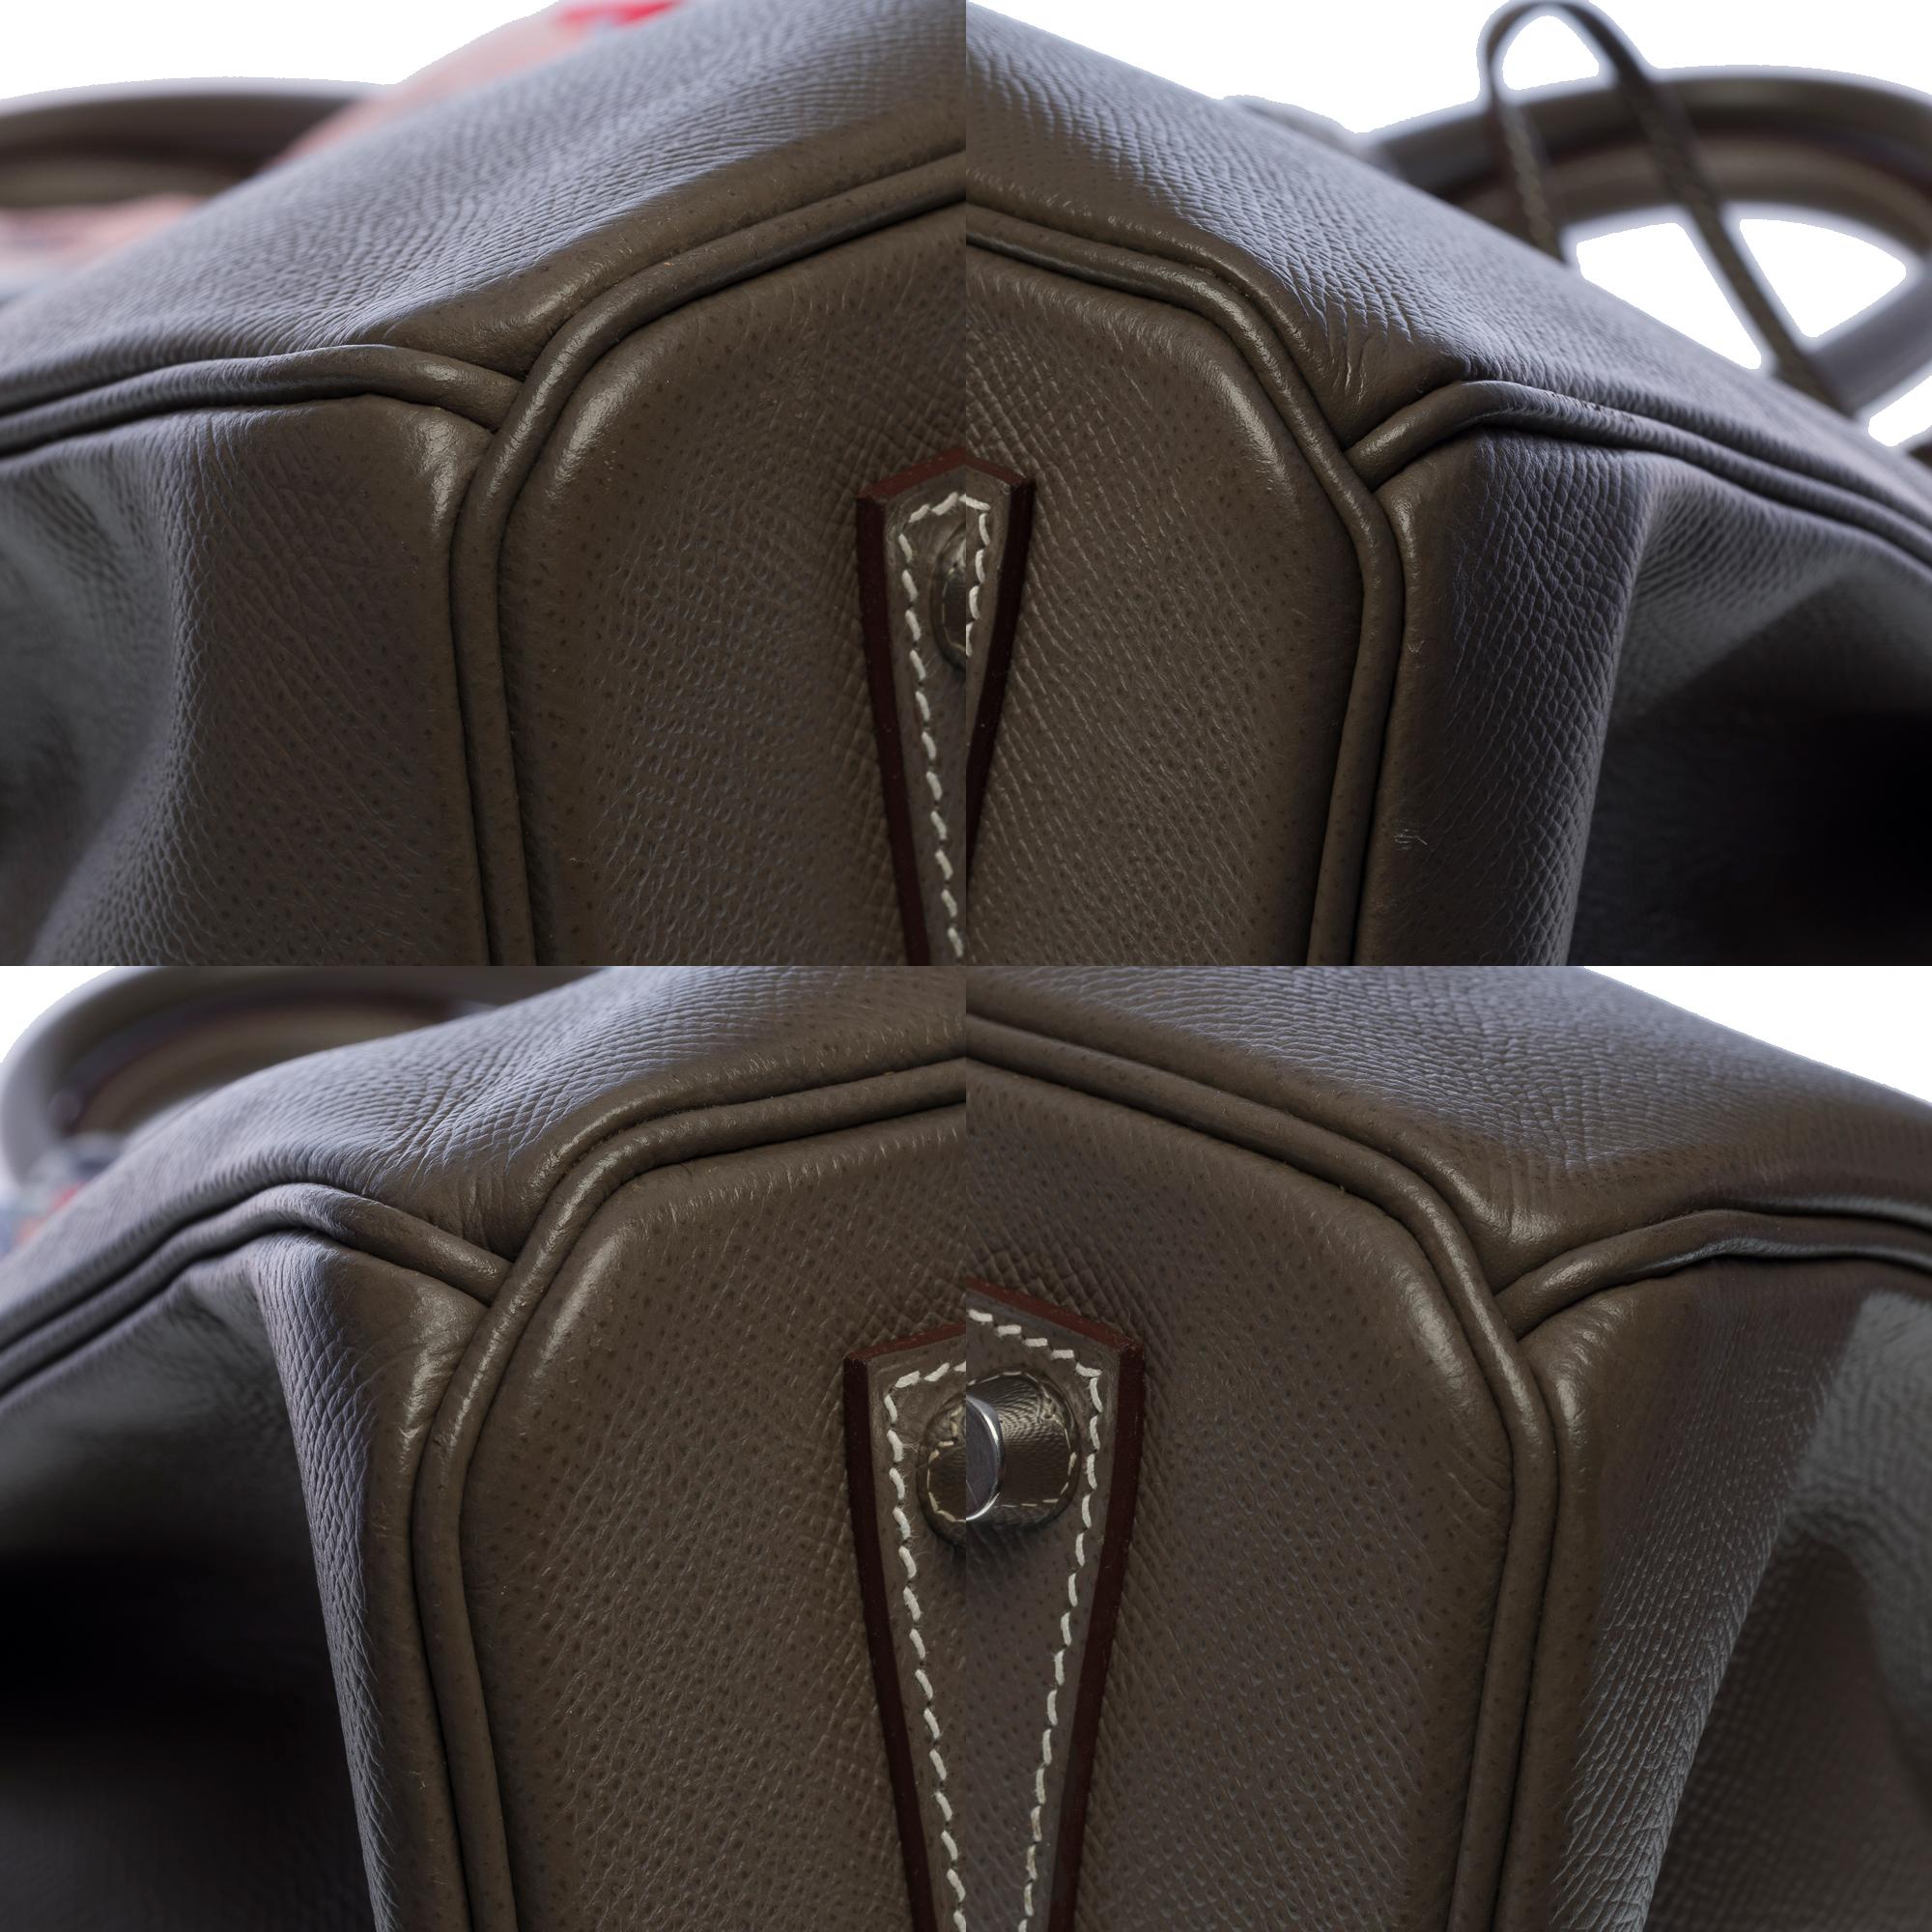 Hermès Birkin 35 HSS (Special Order) handbag in etoupe epsom leather, SHW 4